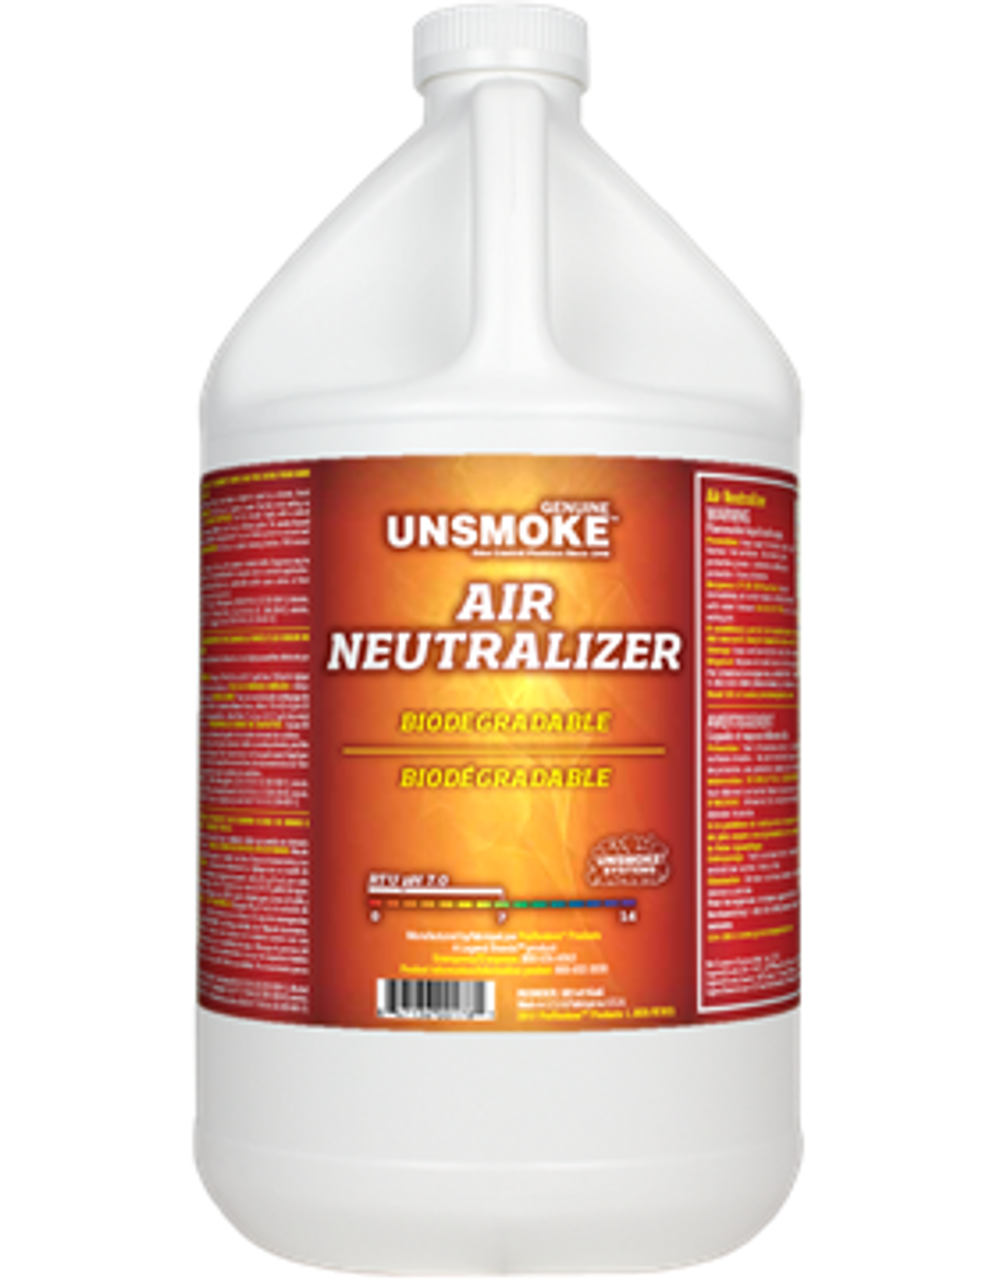 Unsmoke Air Neutralizer Biodegradable - 1gal